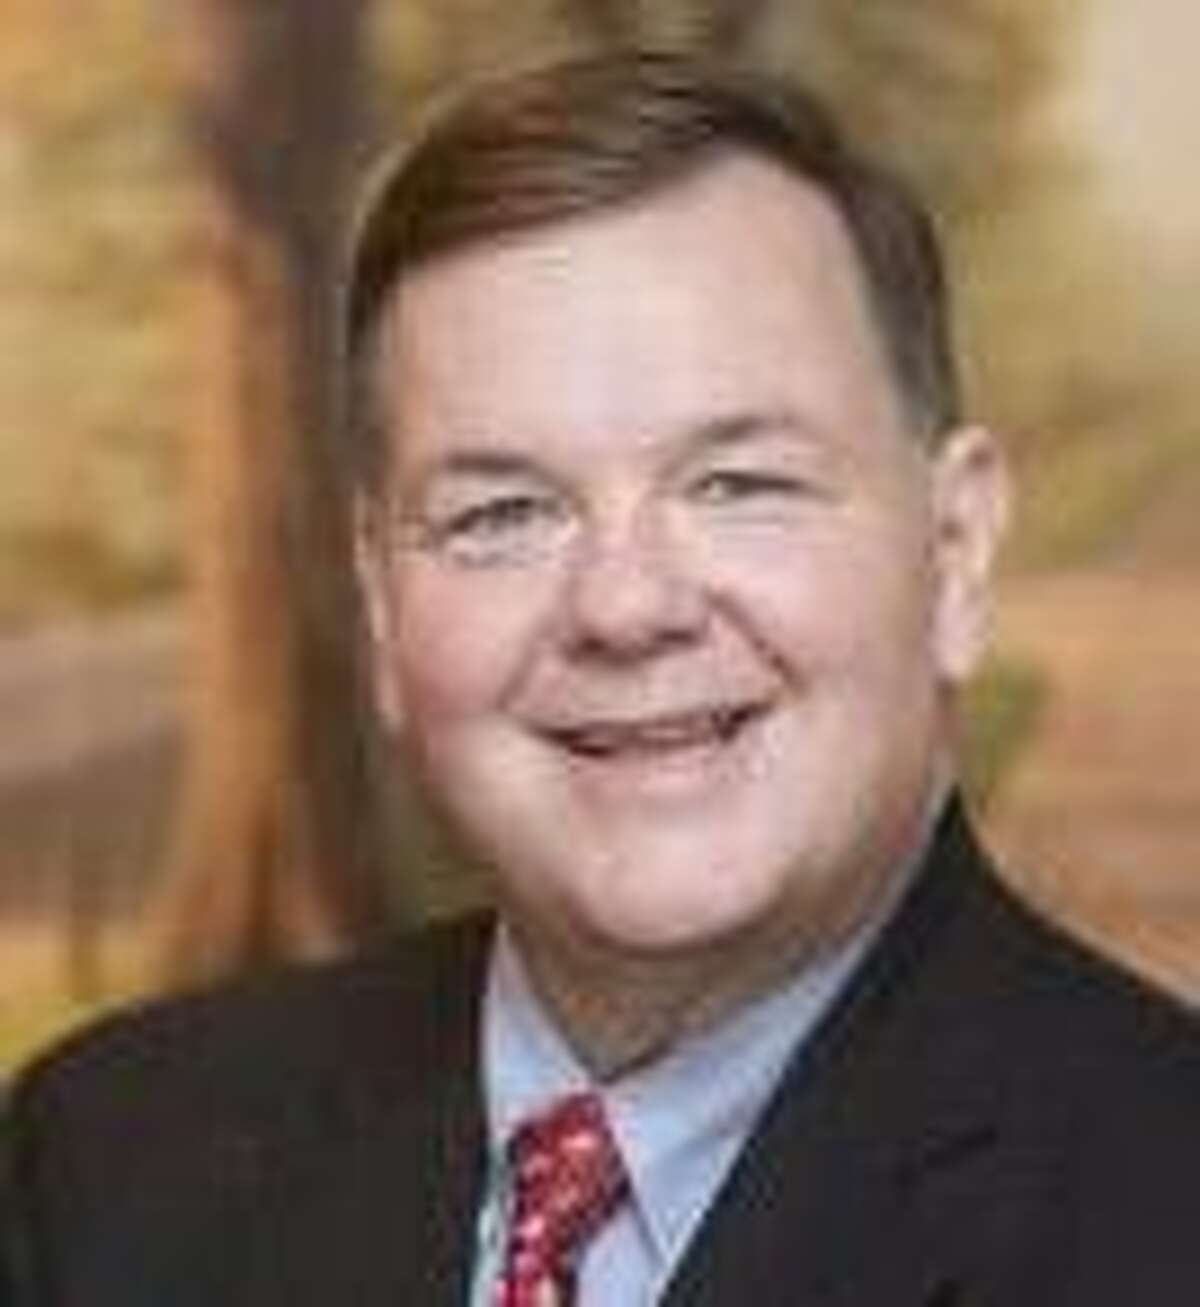 State Rep. John Frey